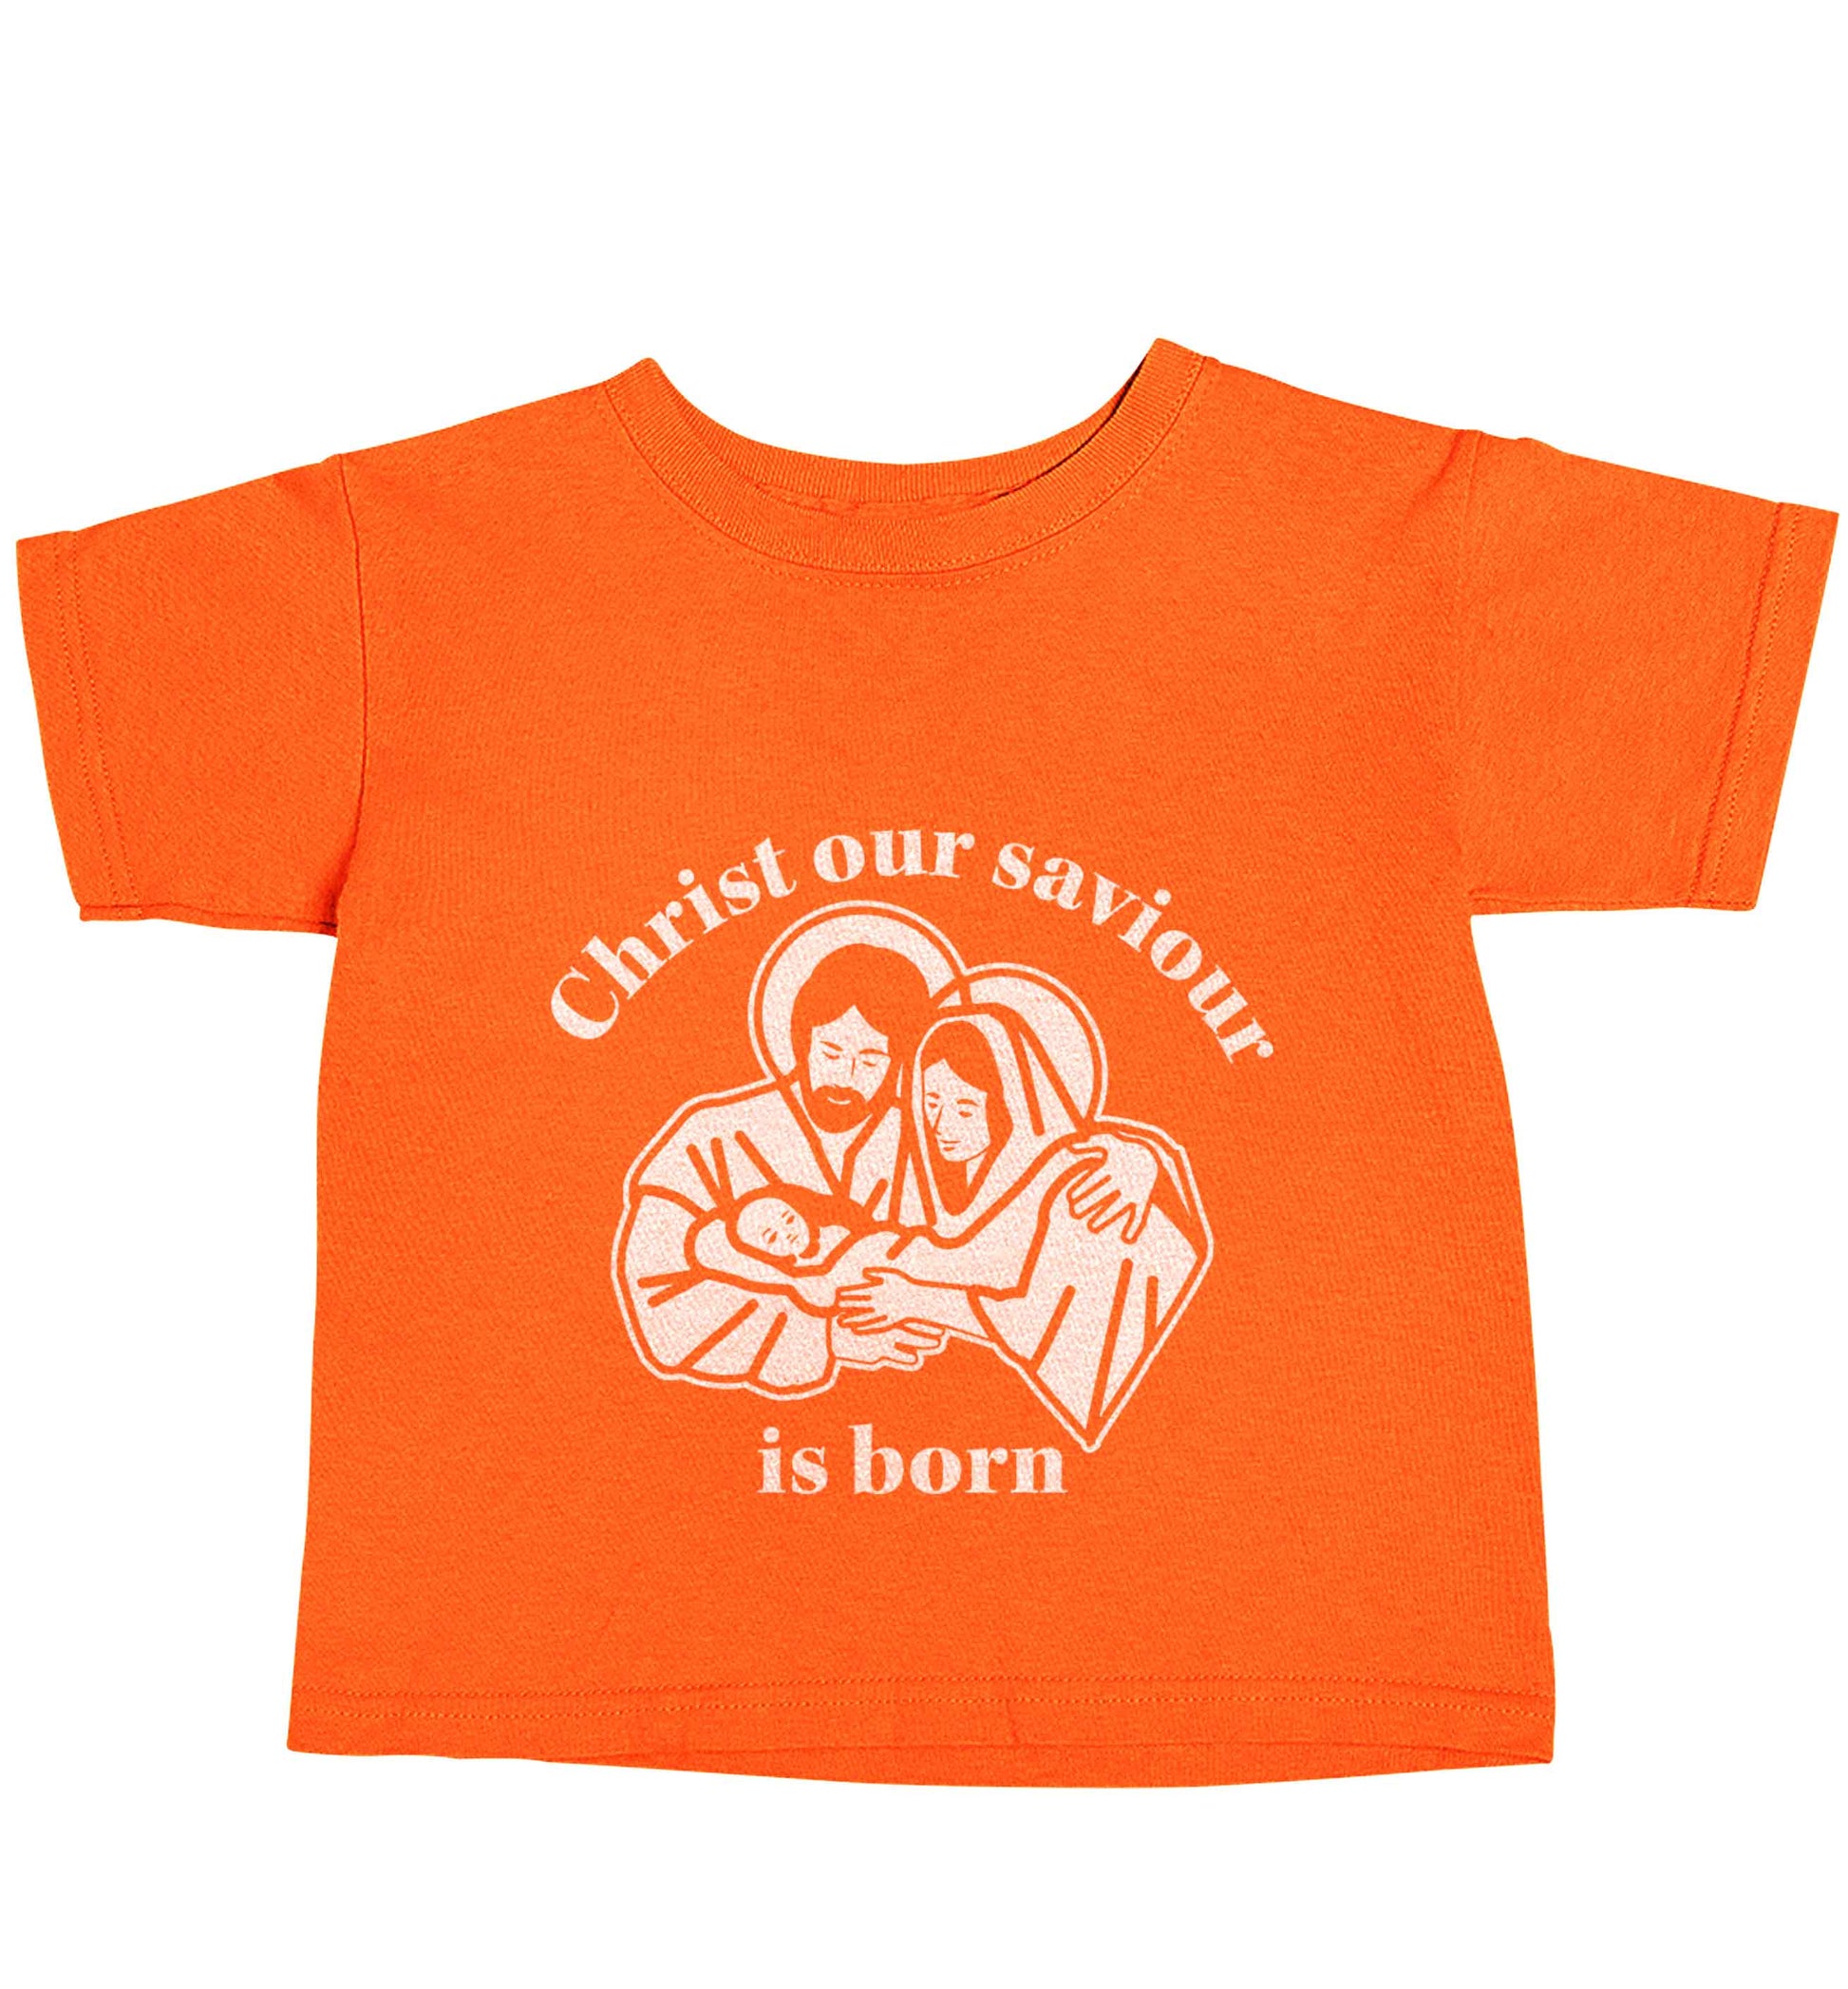 Christ our saviour is born orange baby toddler Tshirt 2 Years